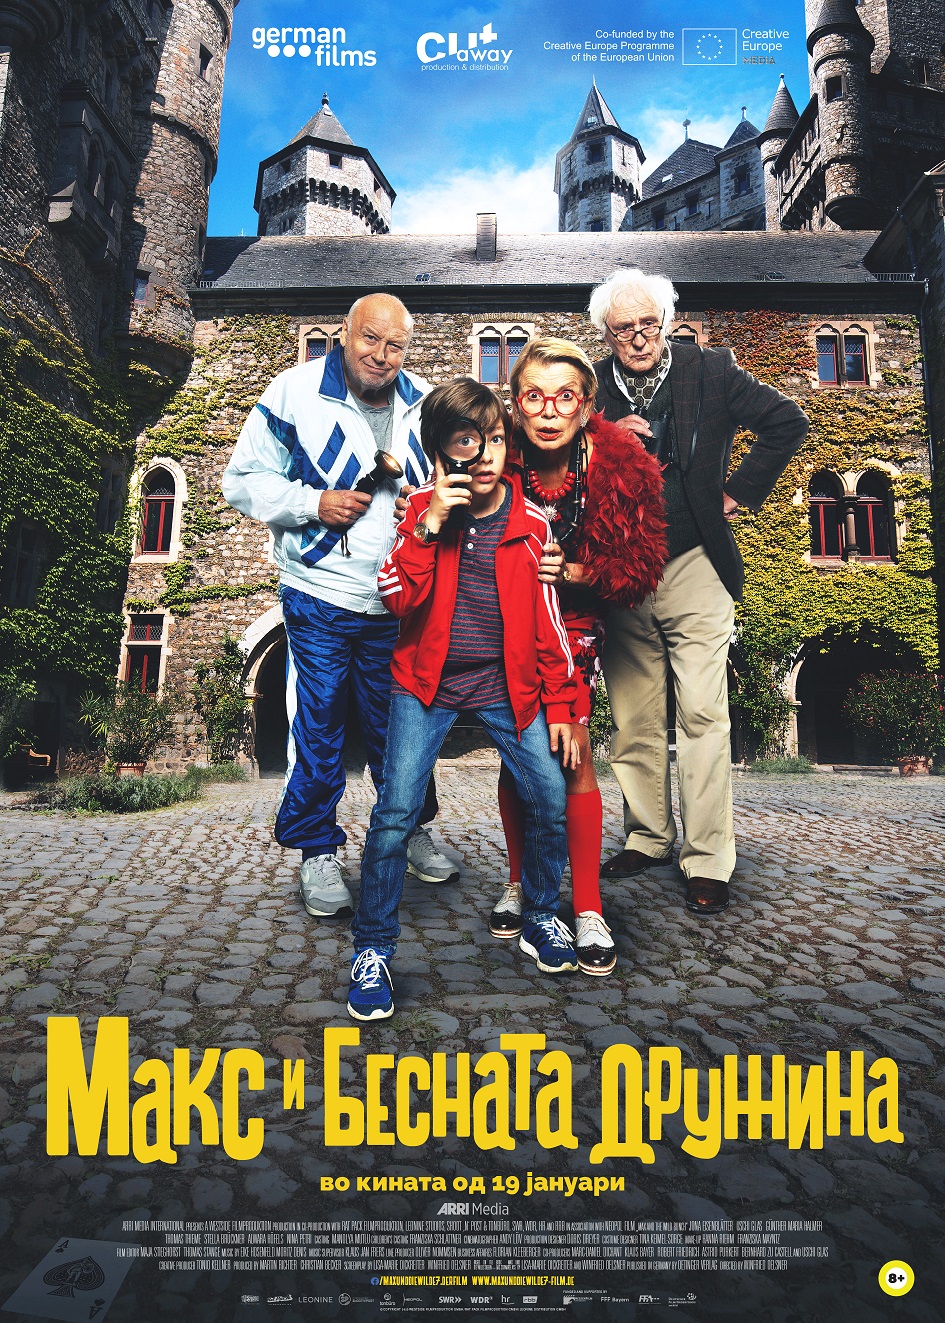 Германскиот филм за деца „Макс и бесната дружина“ во Скопје, Гостивар, Битола, Кавадарци, Неготино, Македонска Каменица